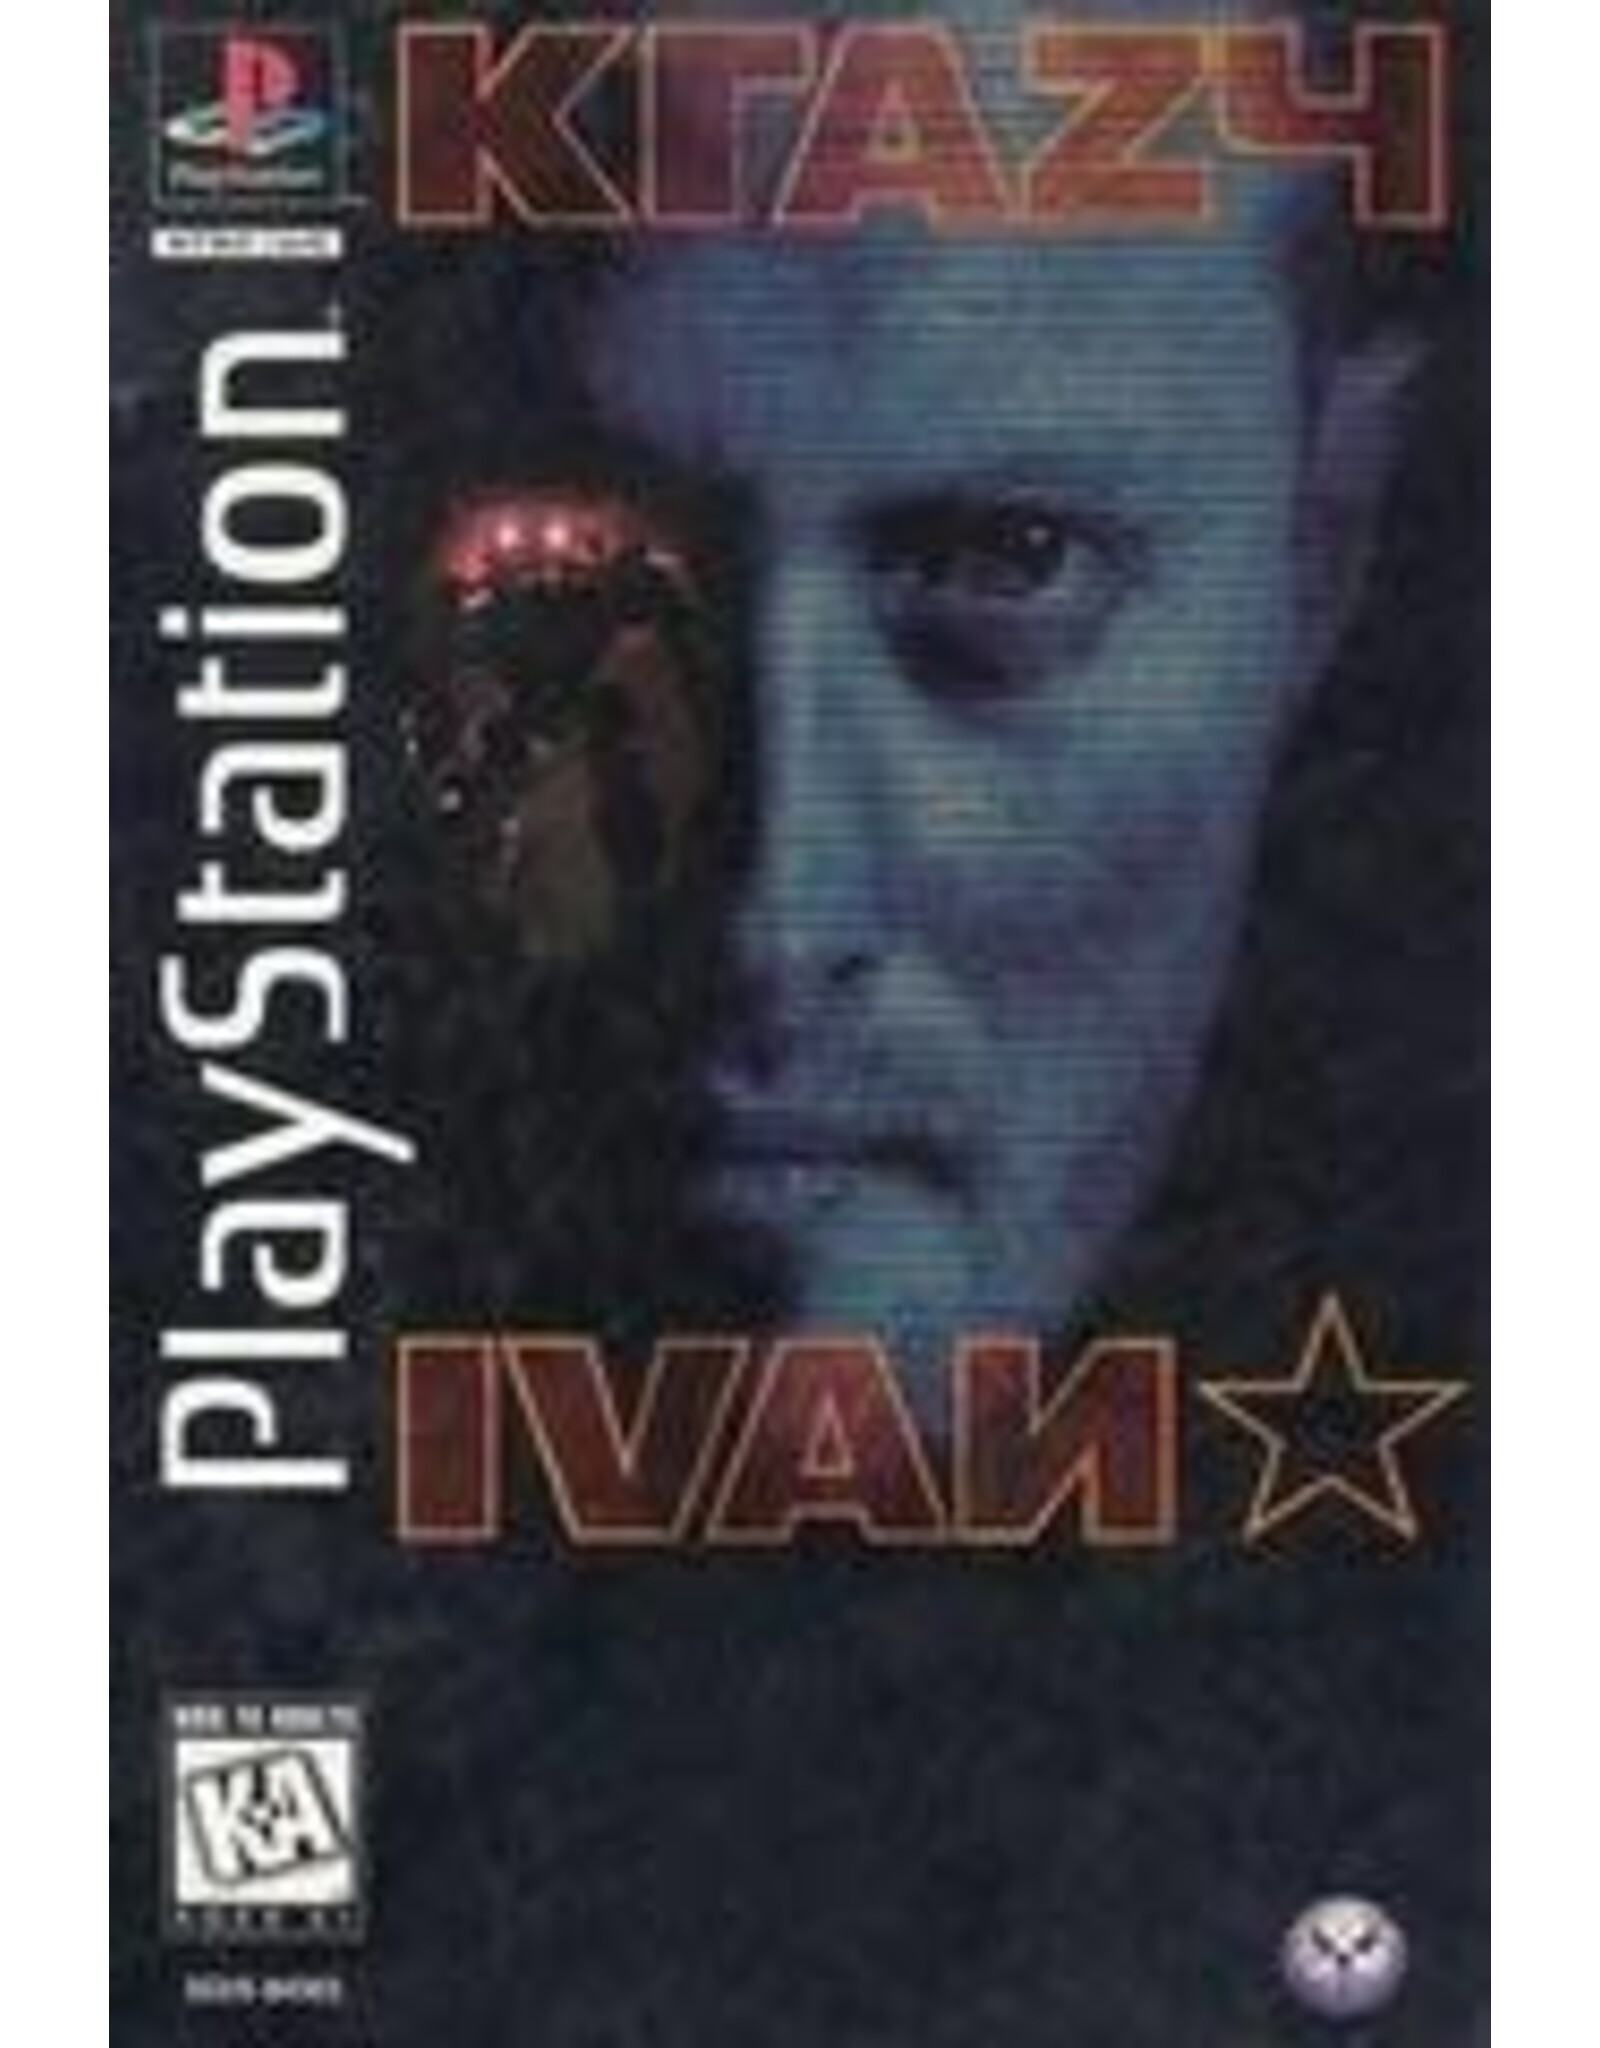 Playstation Krazy Ivan (CiB, Long Box, Minor Damaged Box)